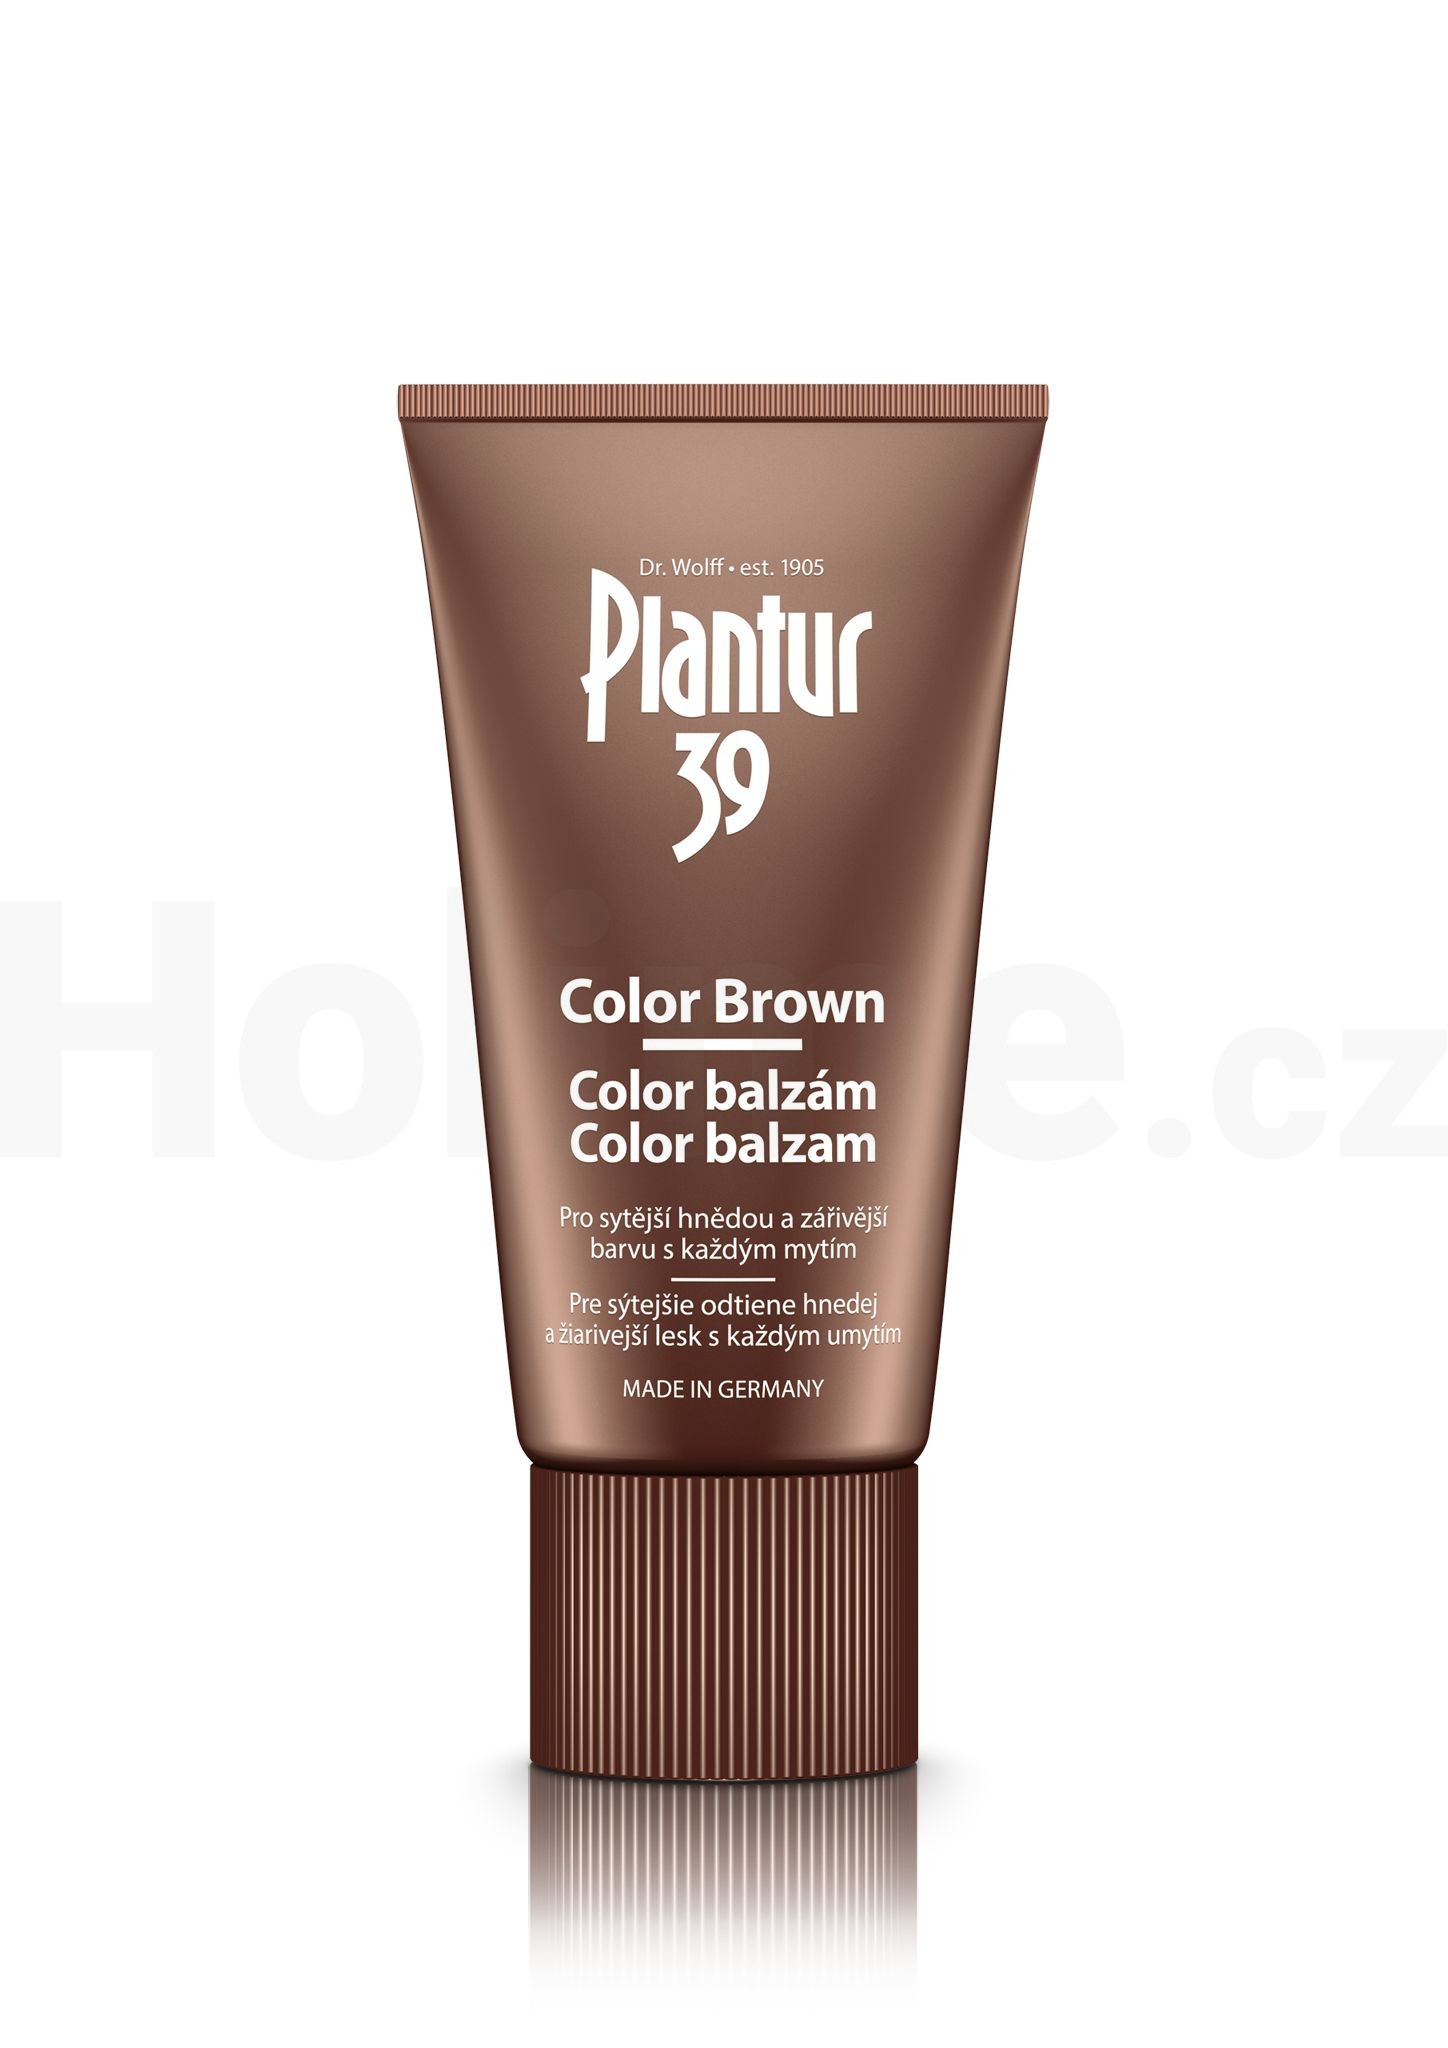 Plantur 39 Color Brown balzám na vlasy 150 ml